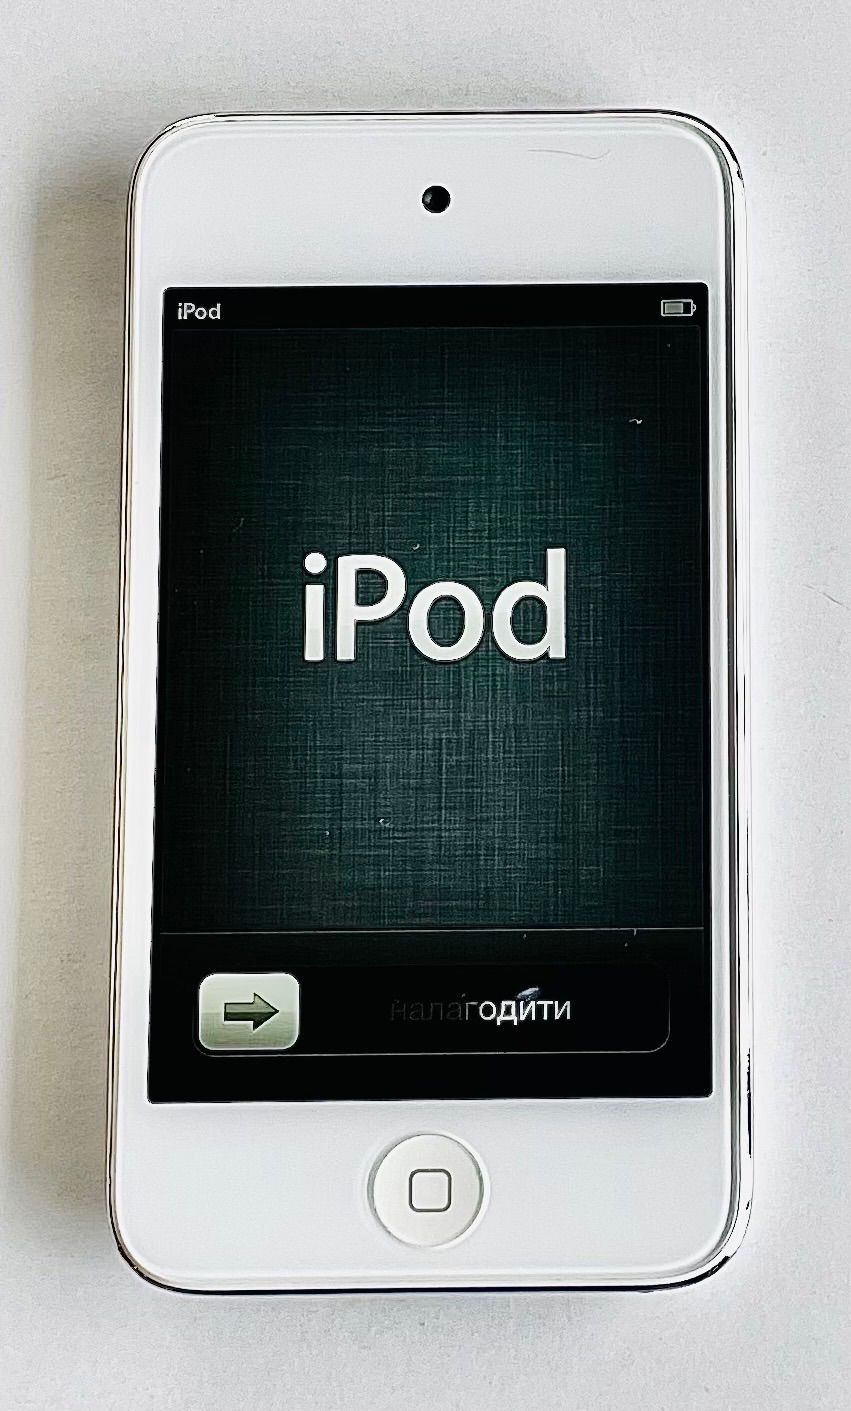 iPod touch 32GB 第4世代 おまけ付き - メイローショップ - メルカリ